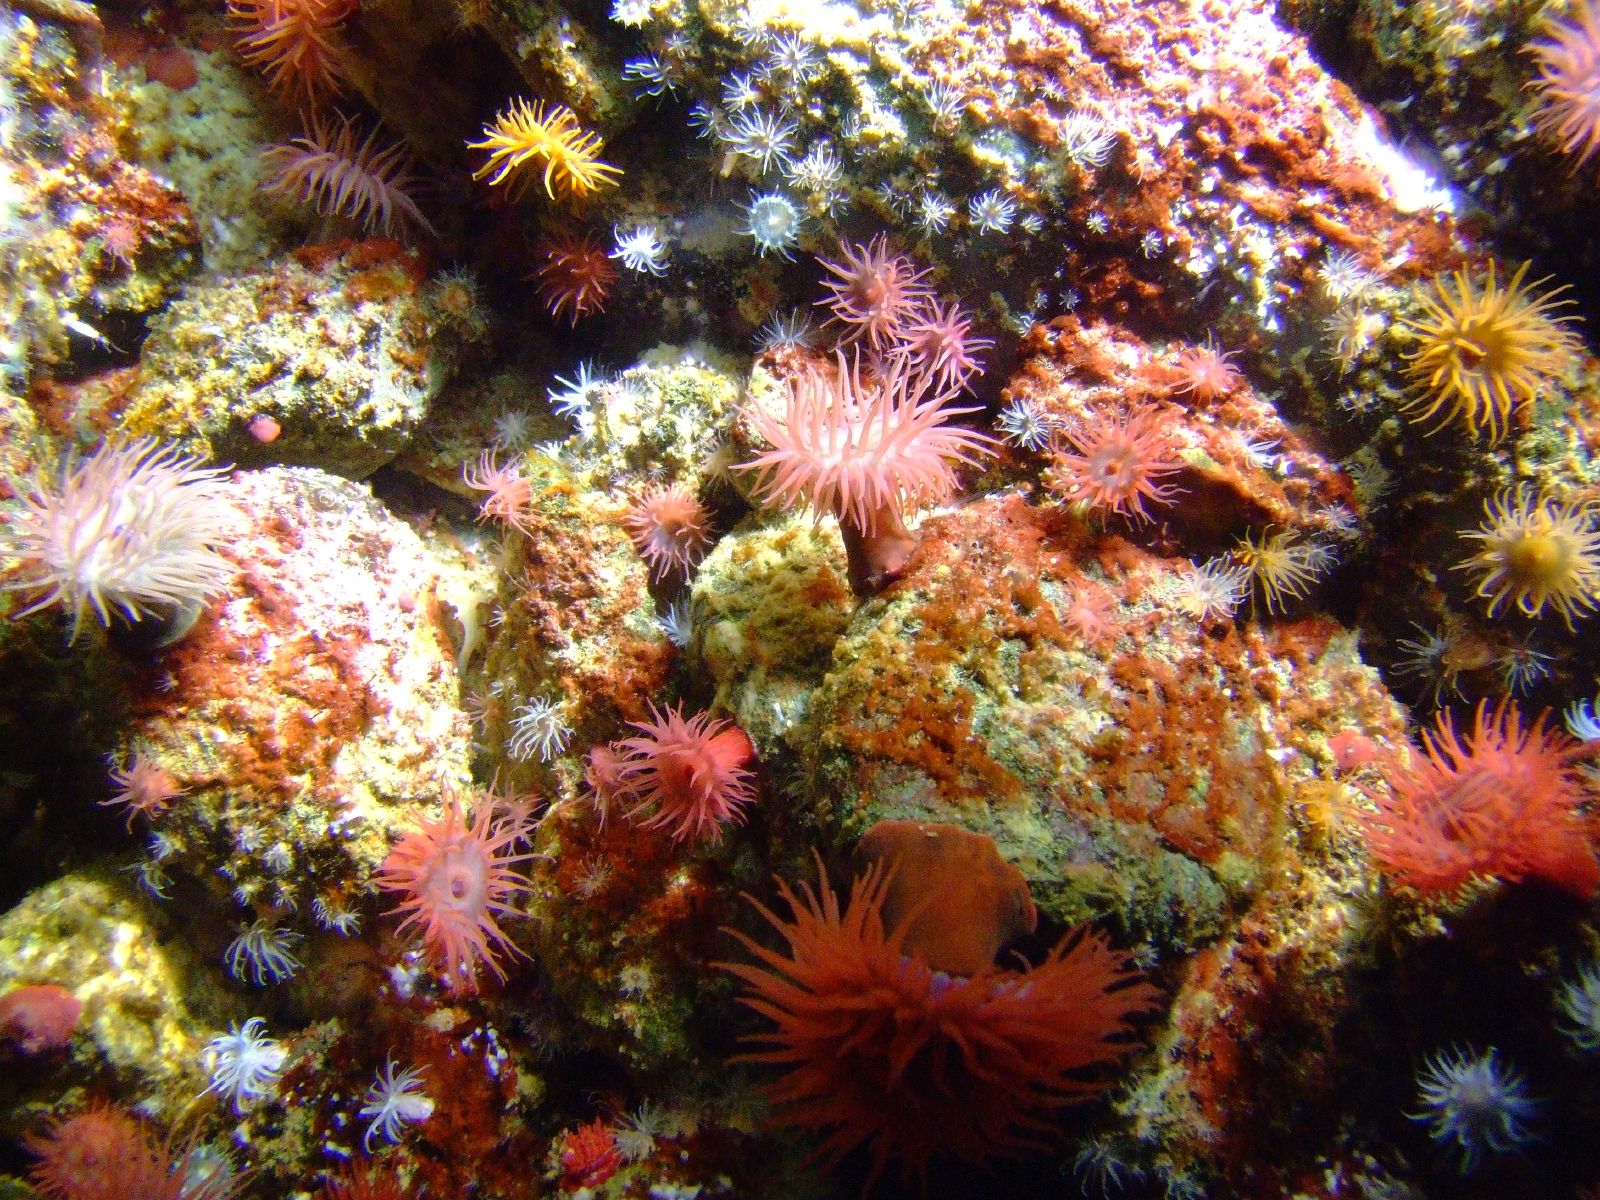 an underwater scene shows red sea stars